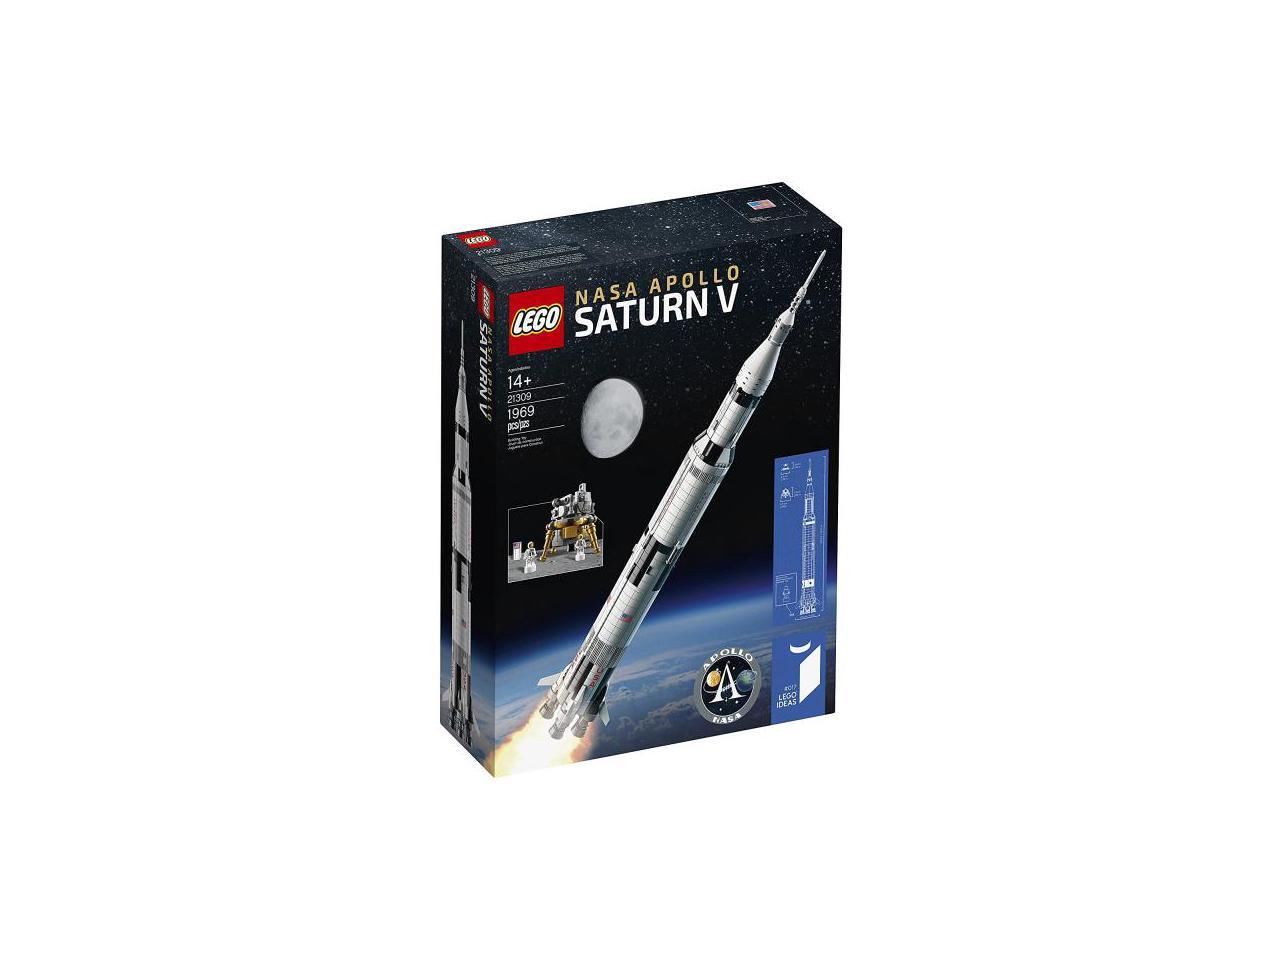 LEGO Saturn V 21309 LEGO Ideas Nasa Apollo Saturn V 21309 ...